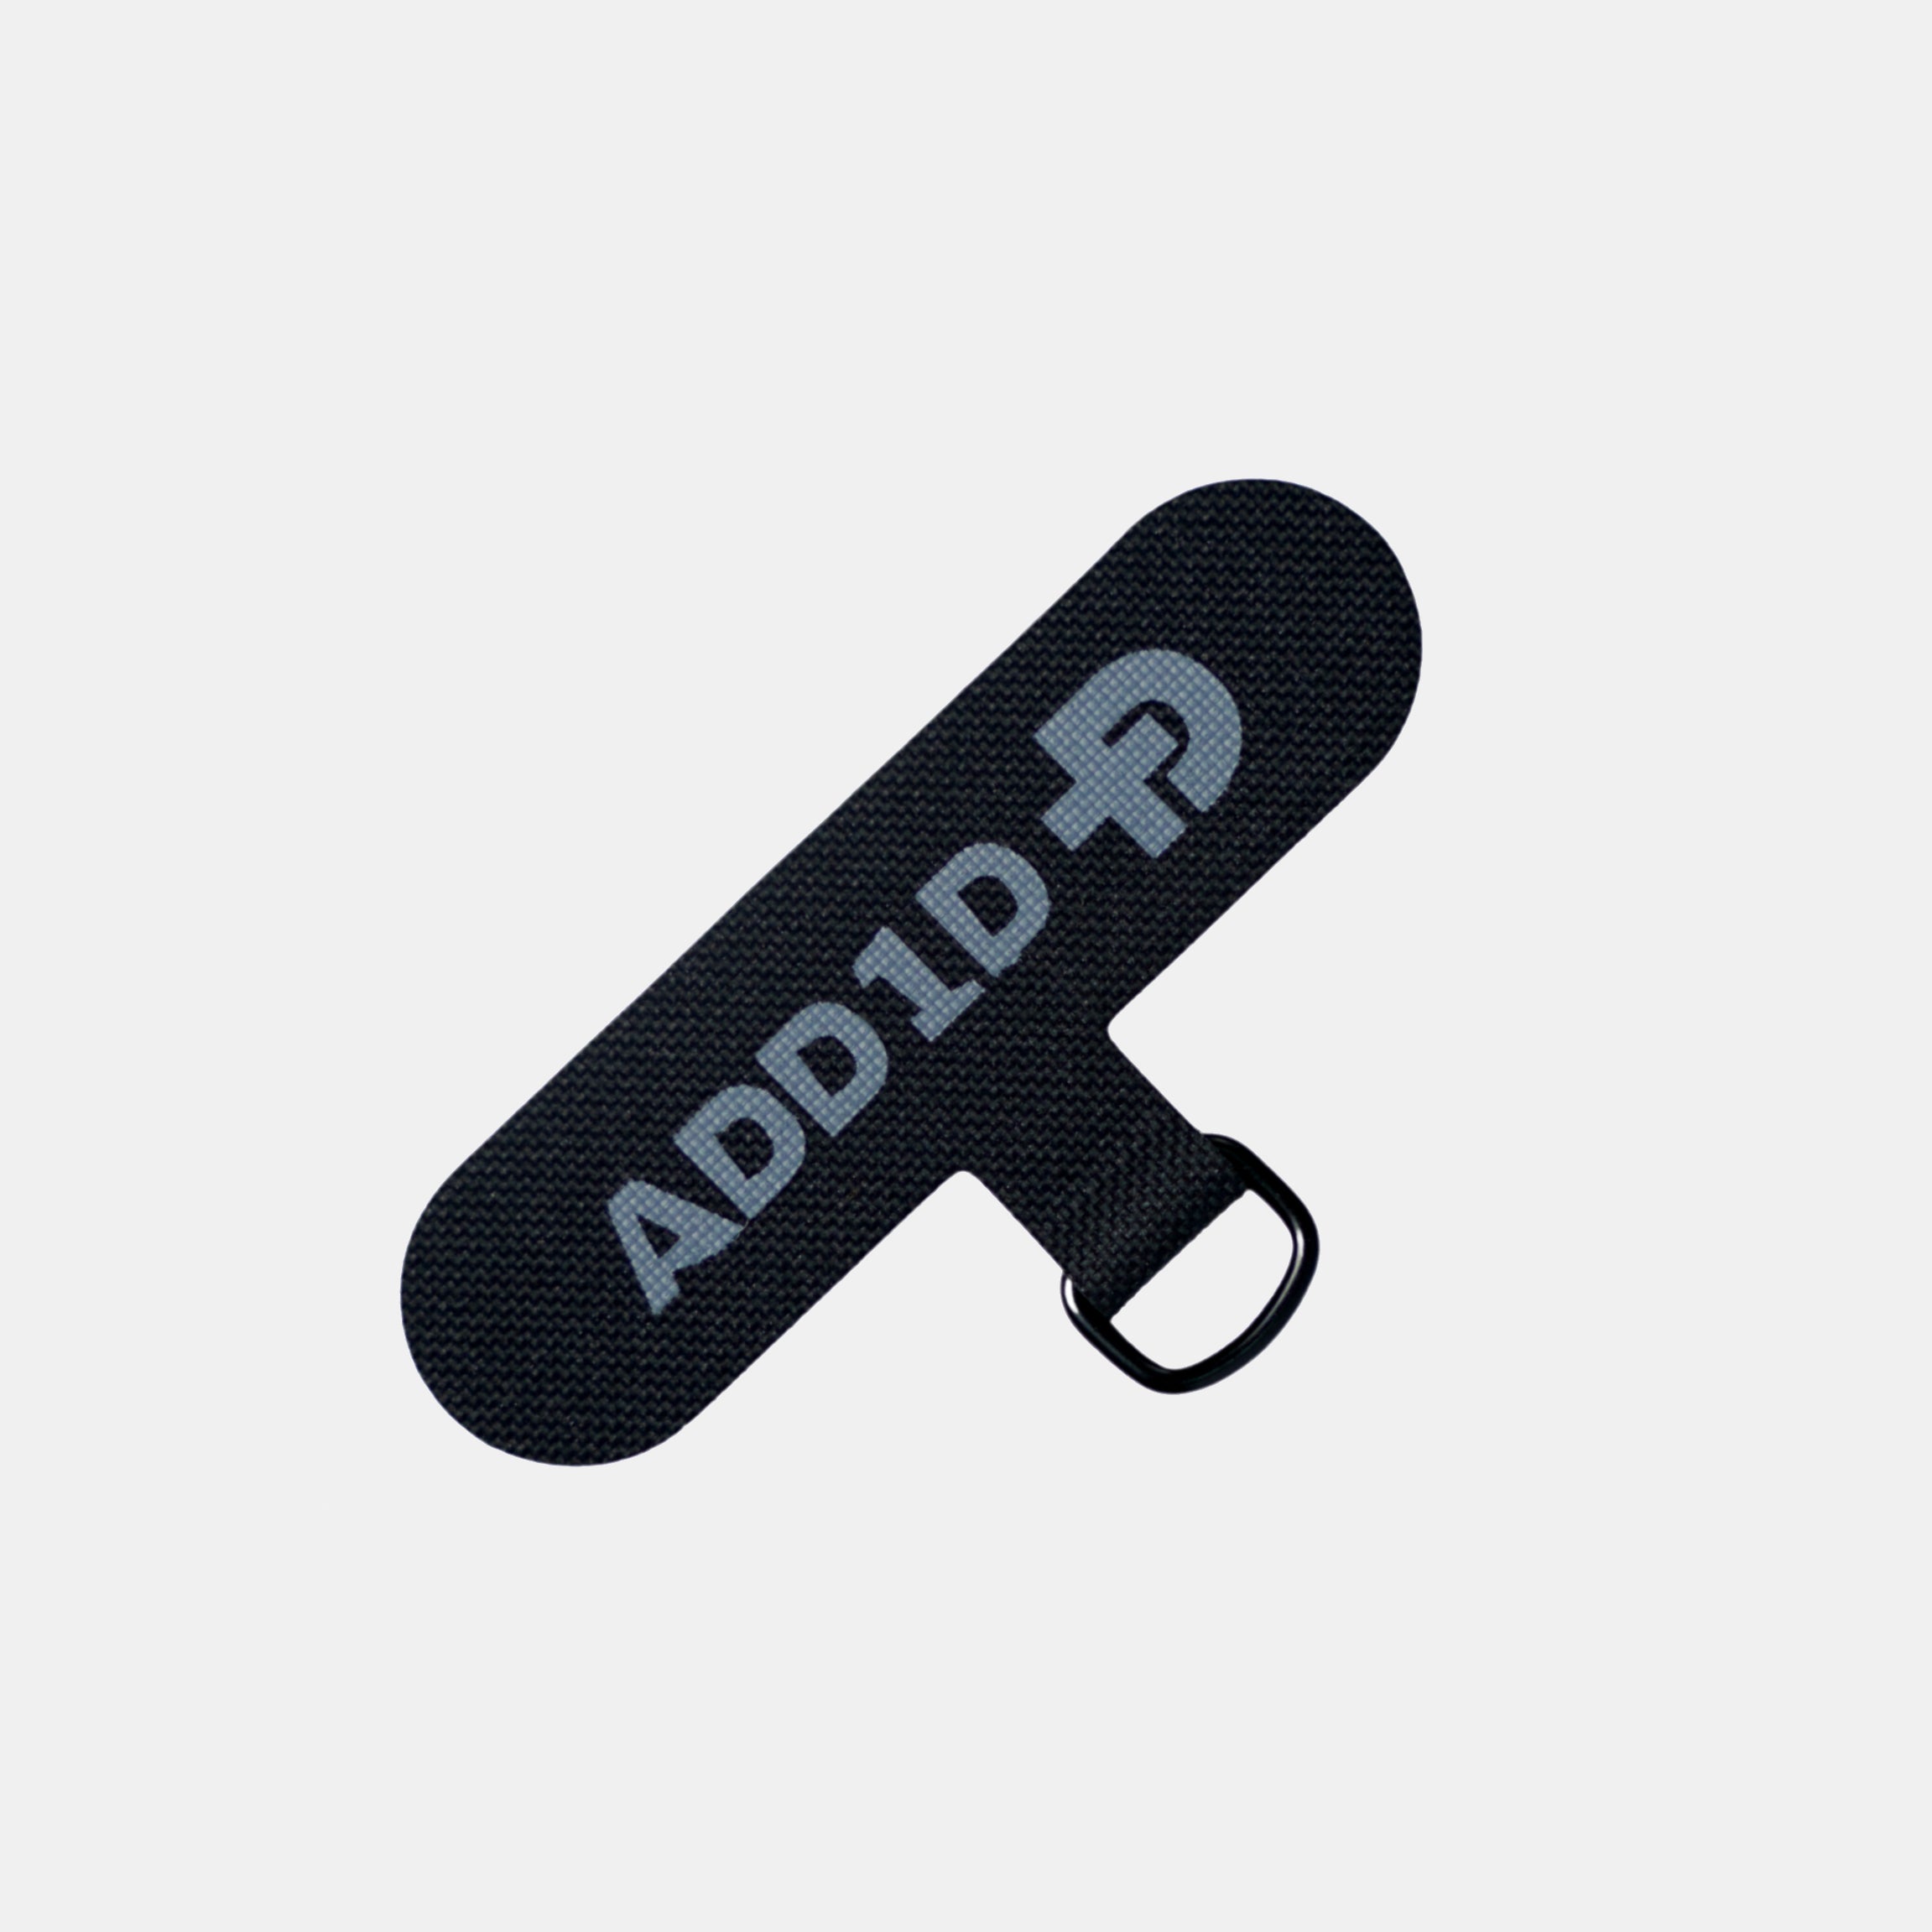 Phone Strap Adapter